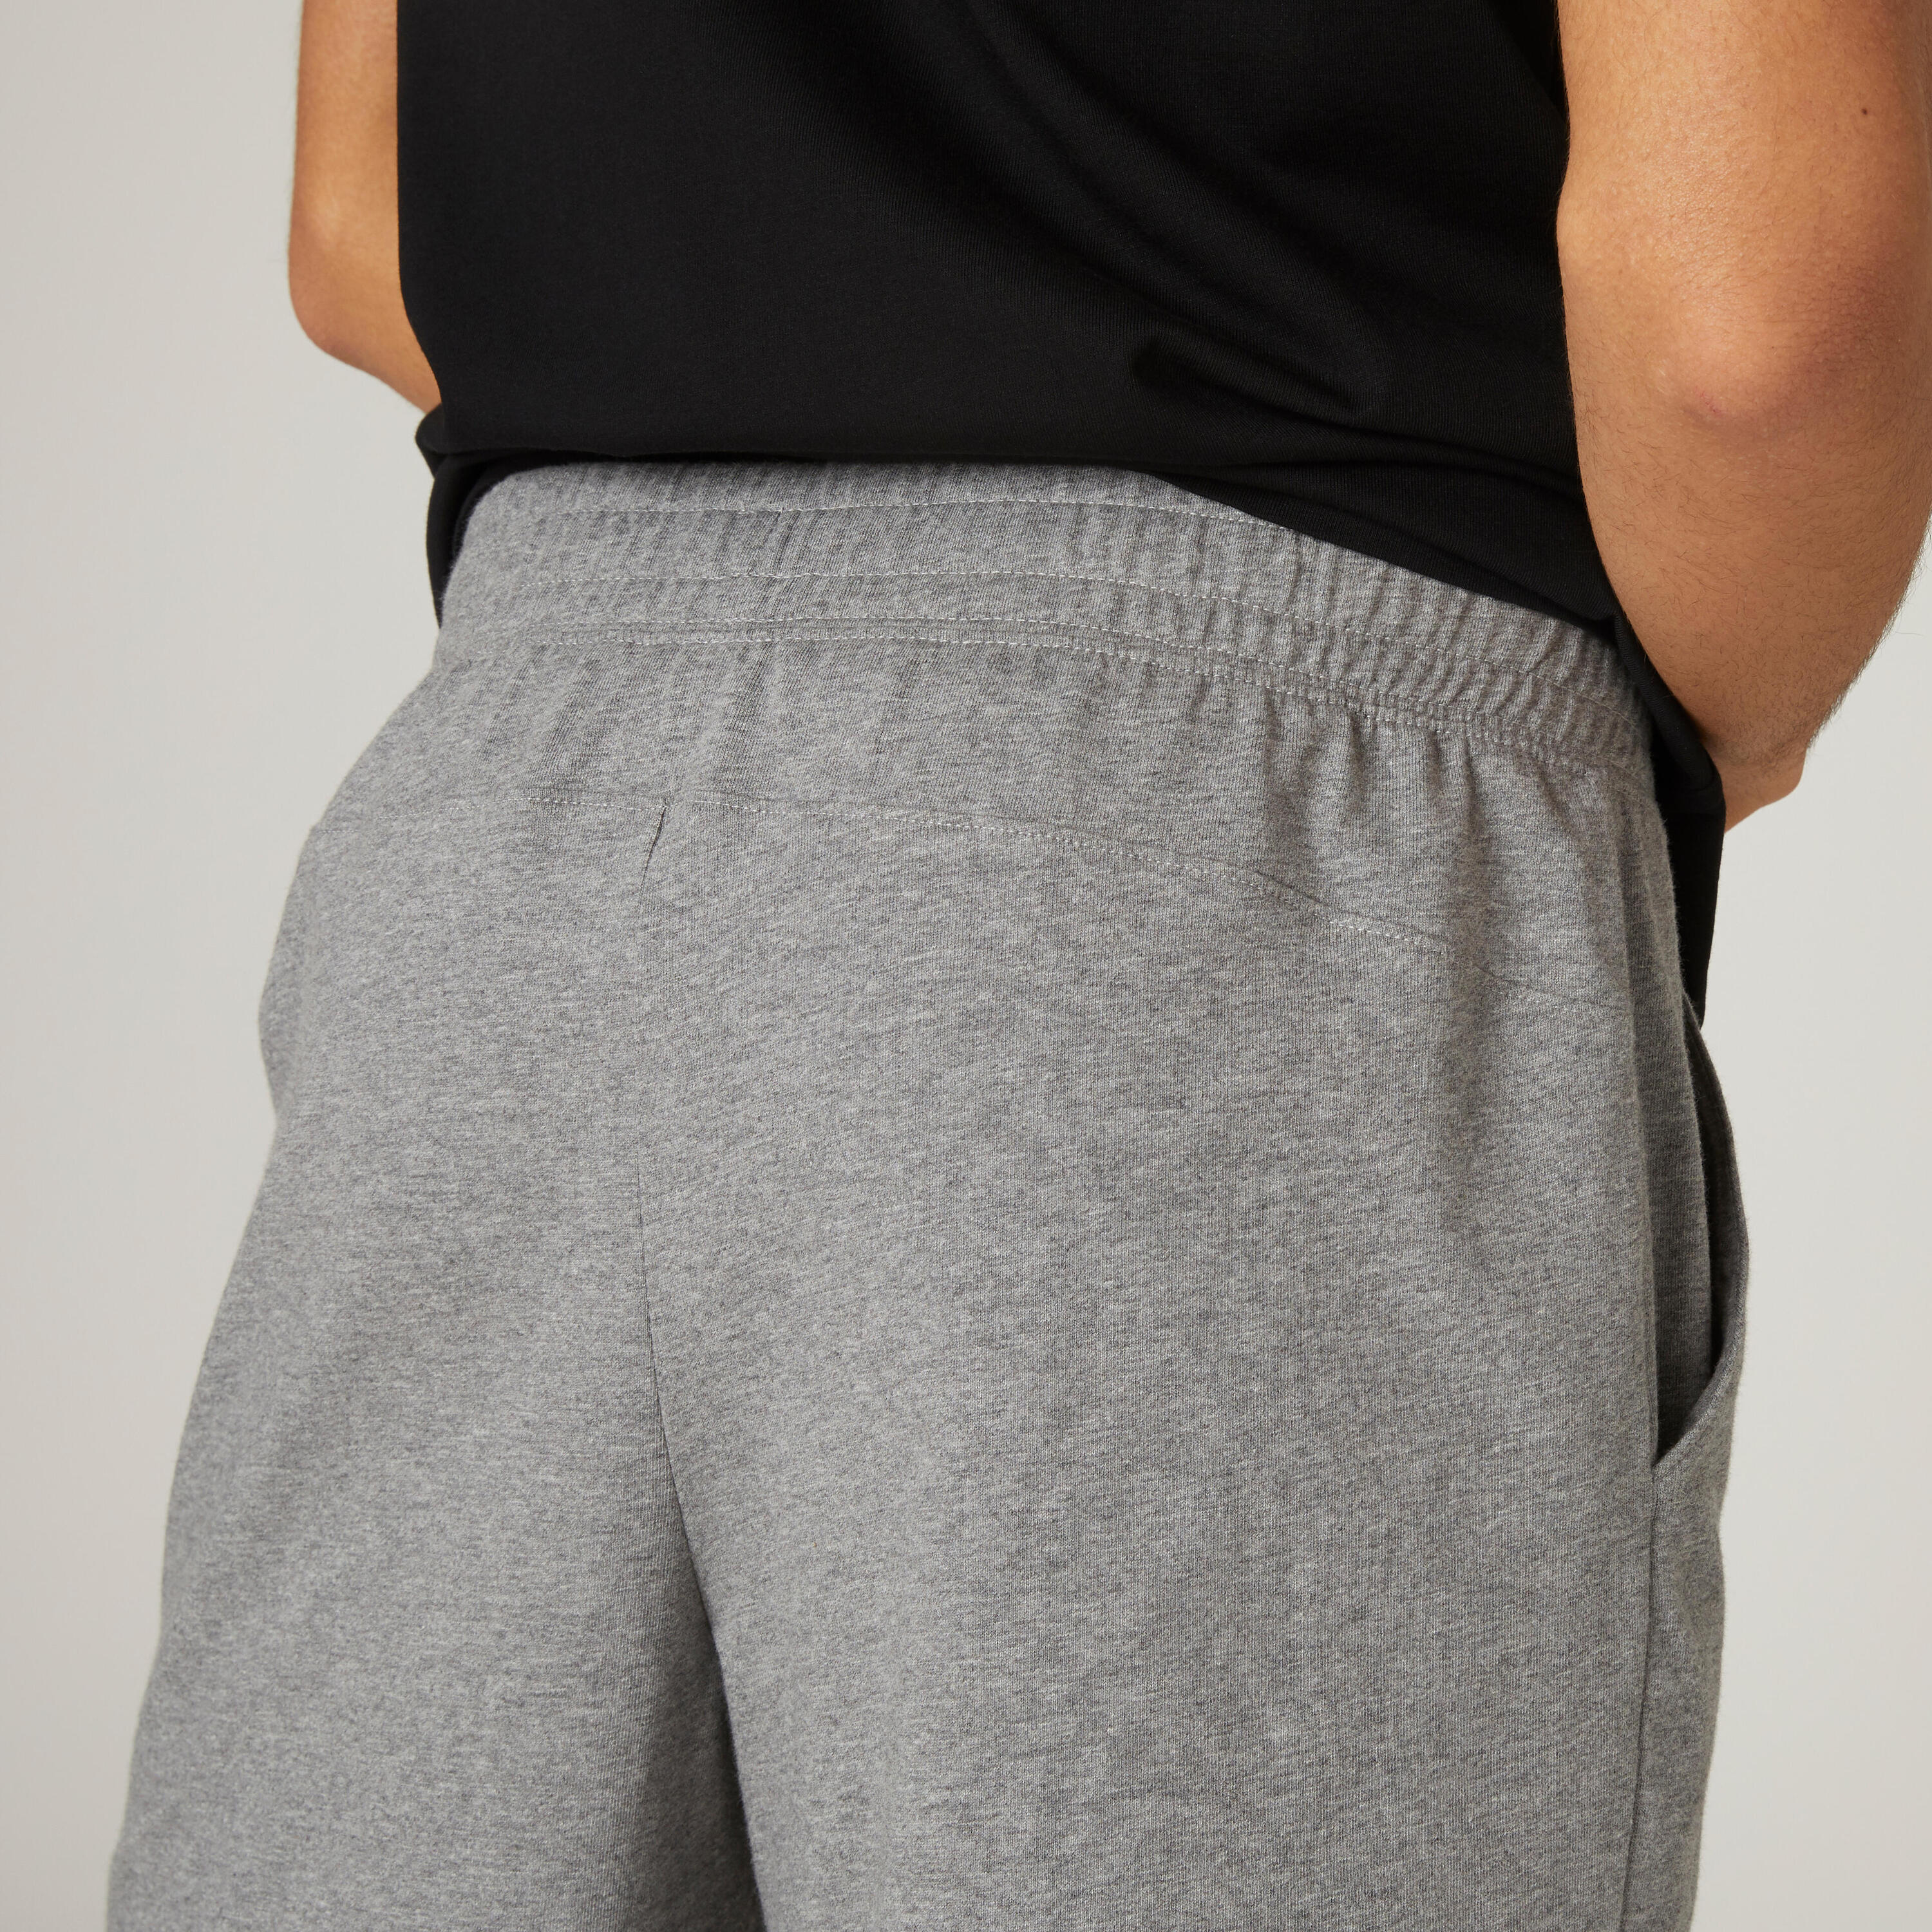 Fitness Long Stretch Cotton Shorts - Mottled Grey 6/7